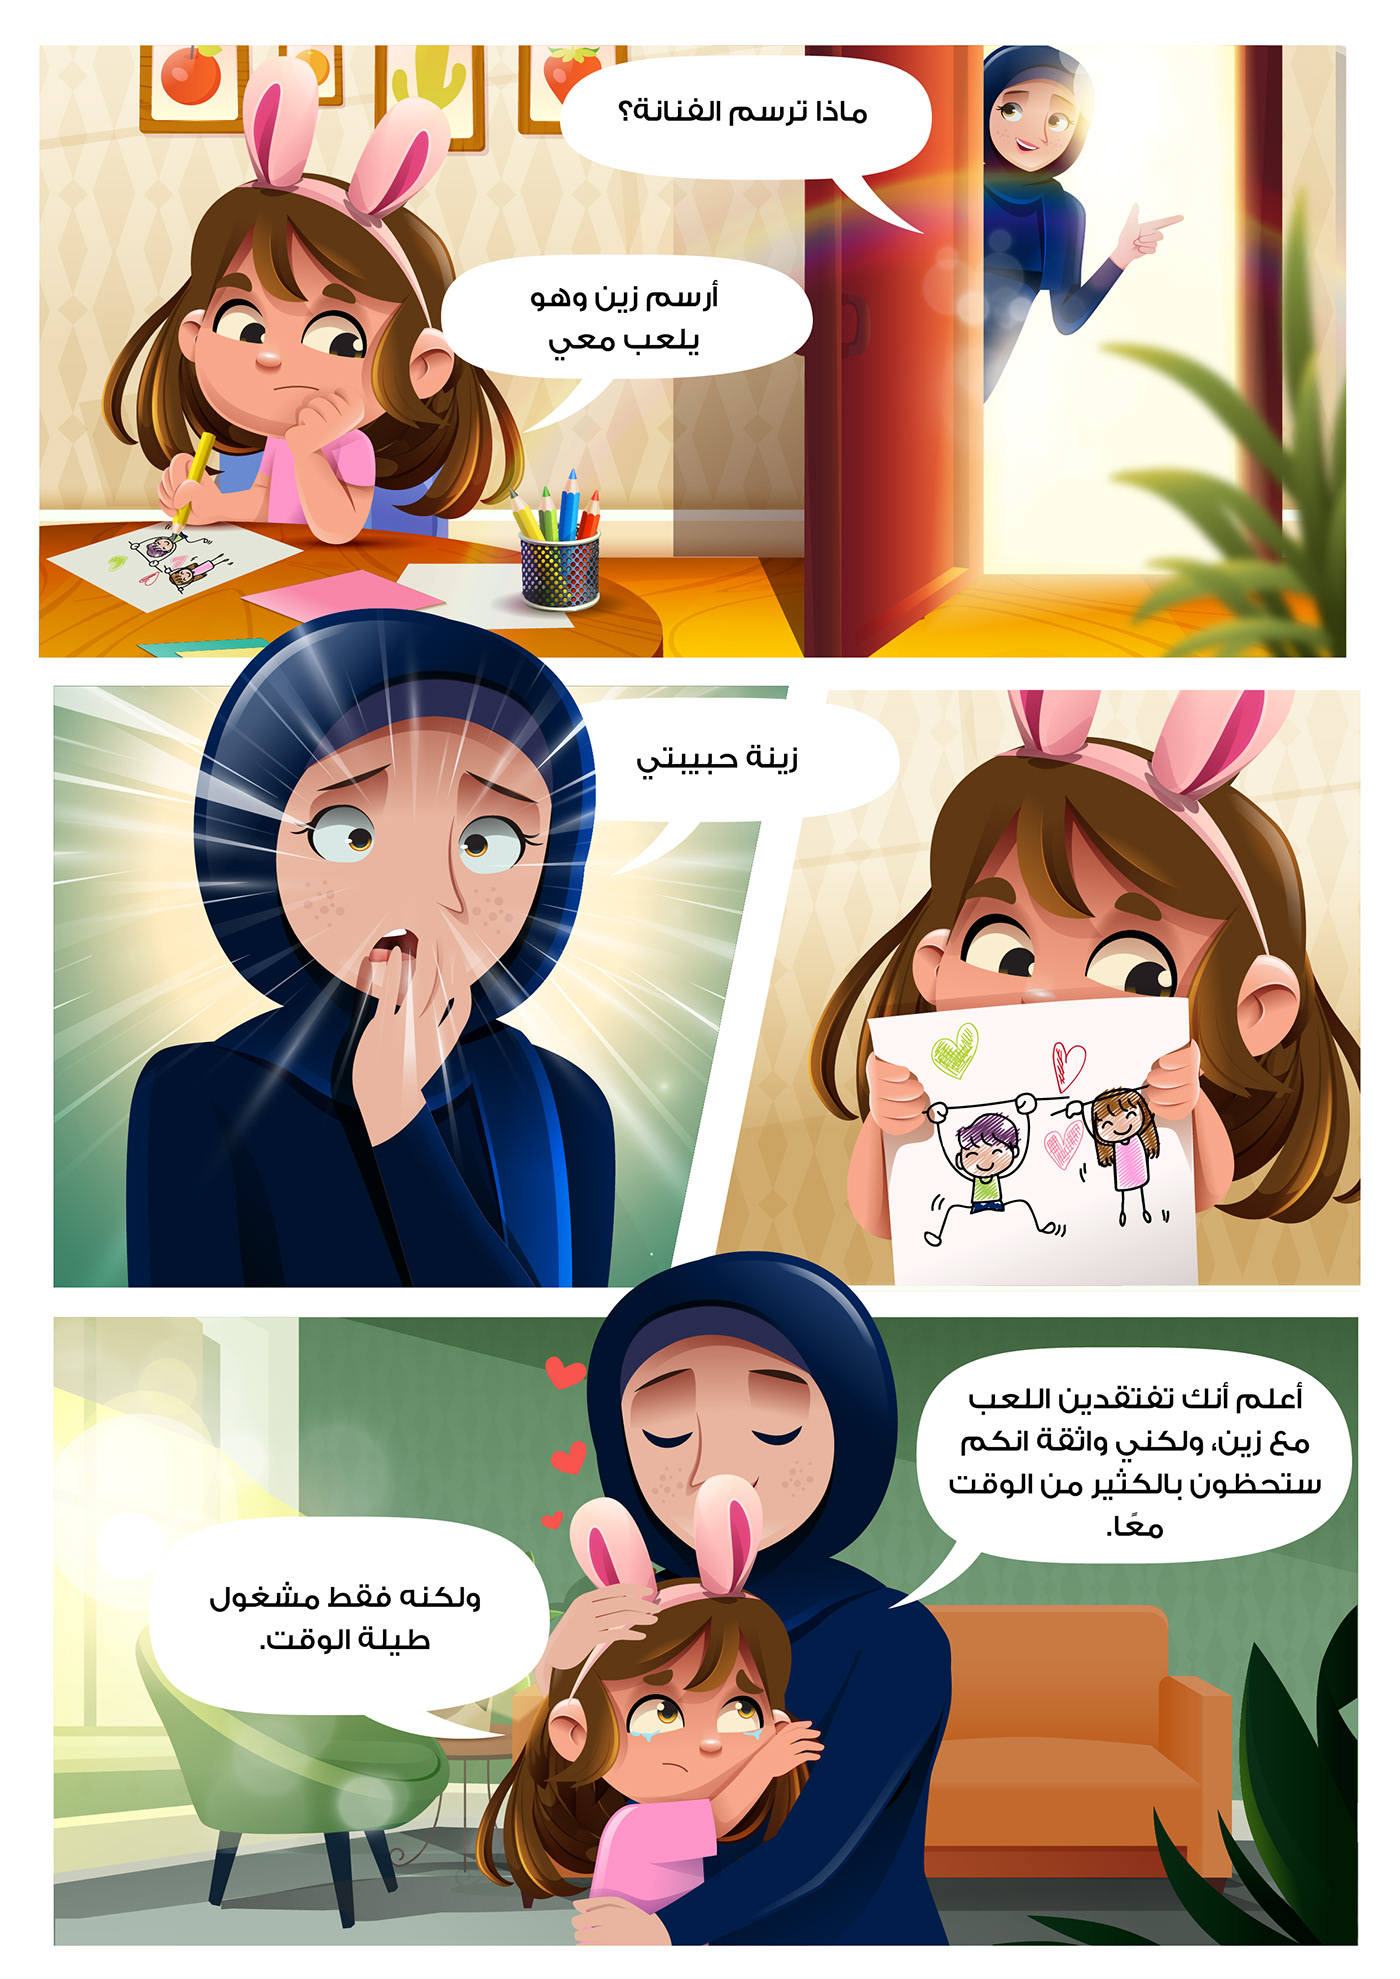 serag basel Arab kids Character design  Saudi Arabia kids story children illustration children's book digital illustration muslim character